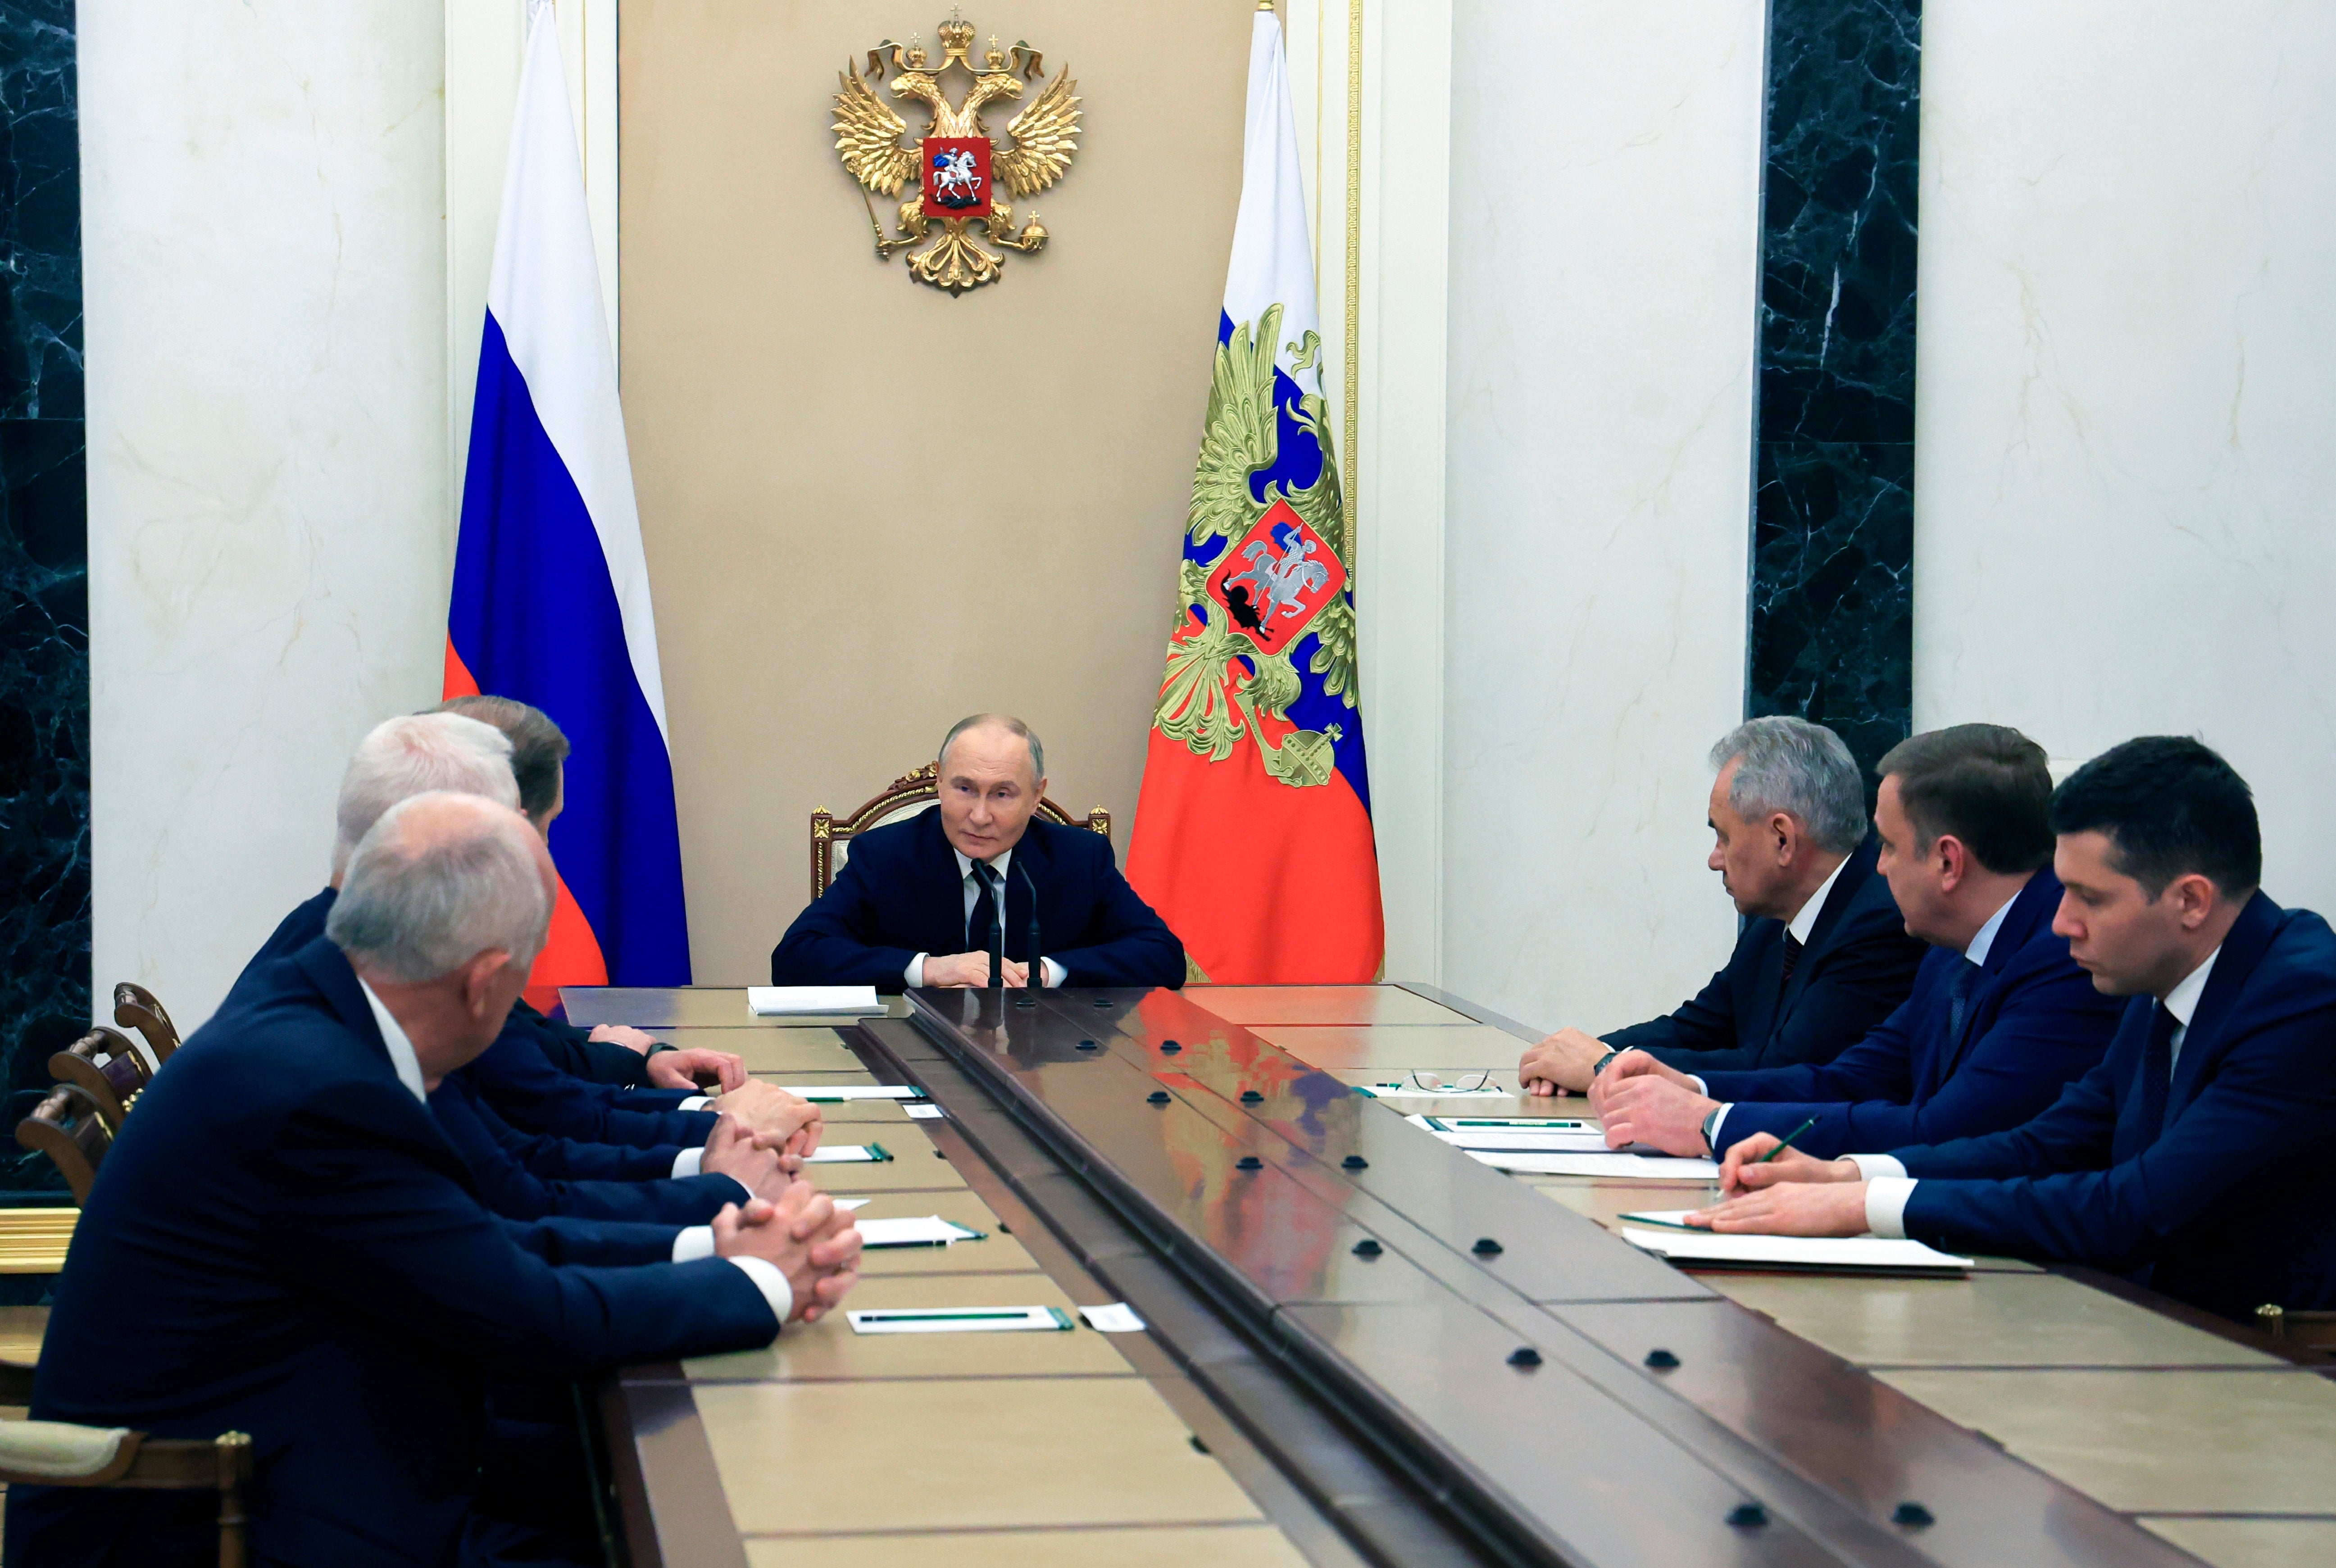 Russian President Vladimir Putin held his own meeting with his top war generals in the Kremlin on Wednesday